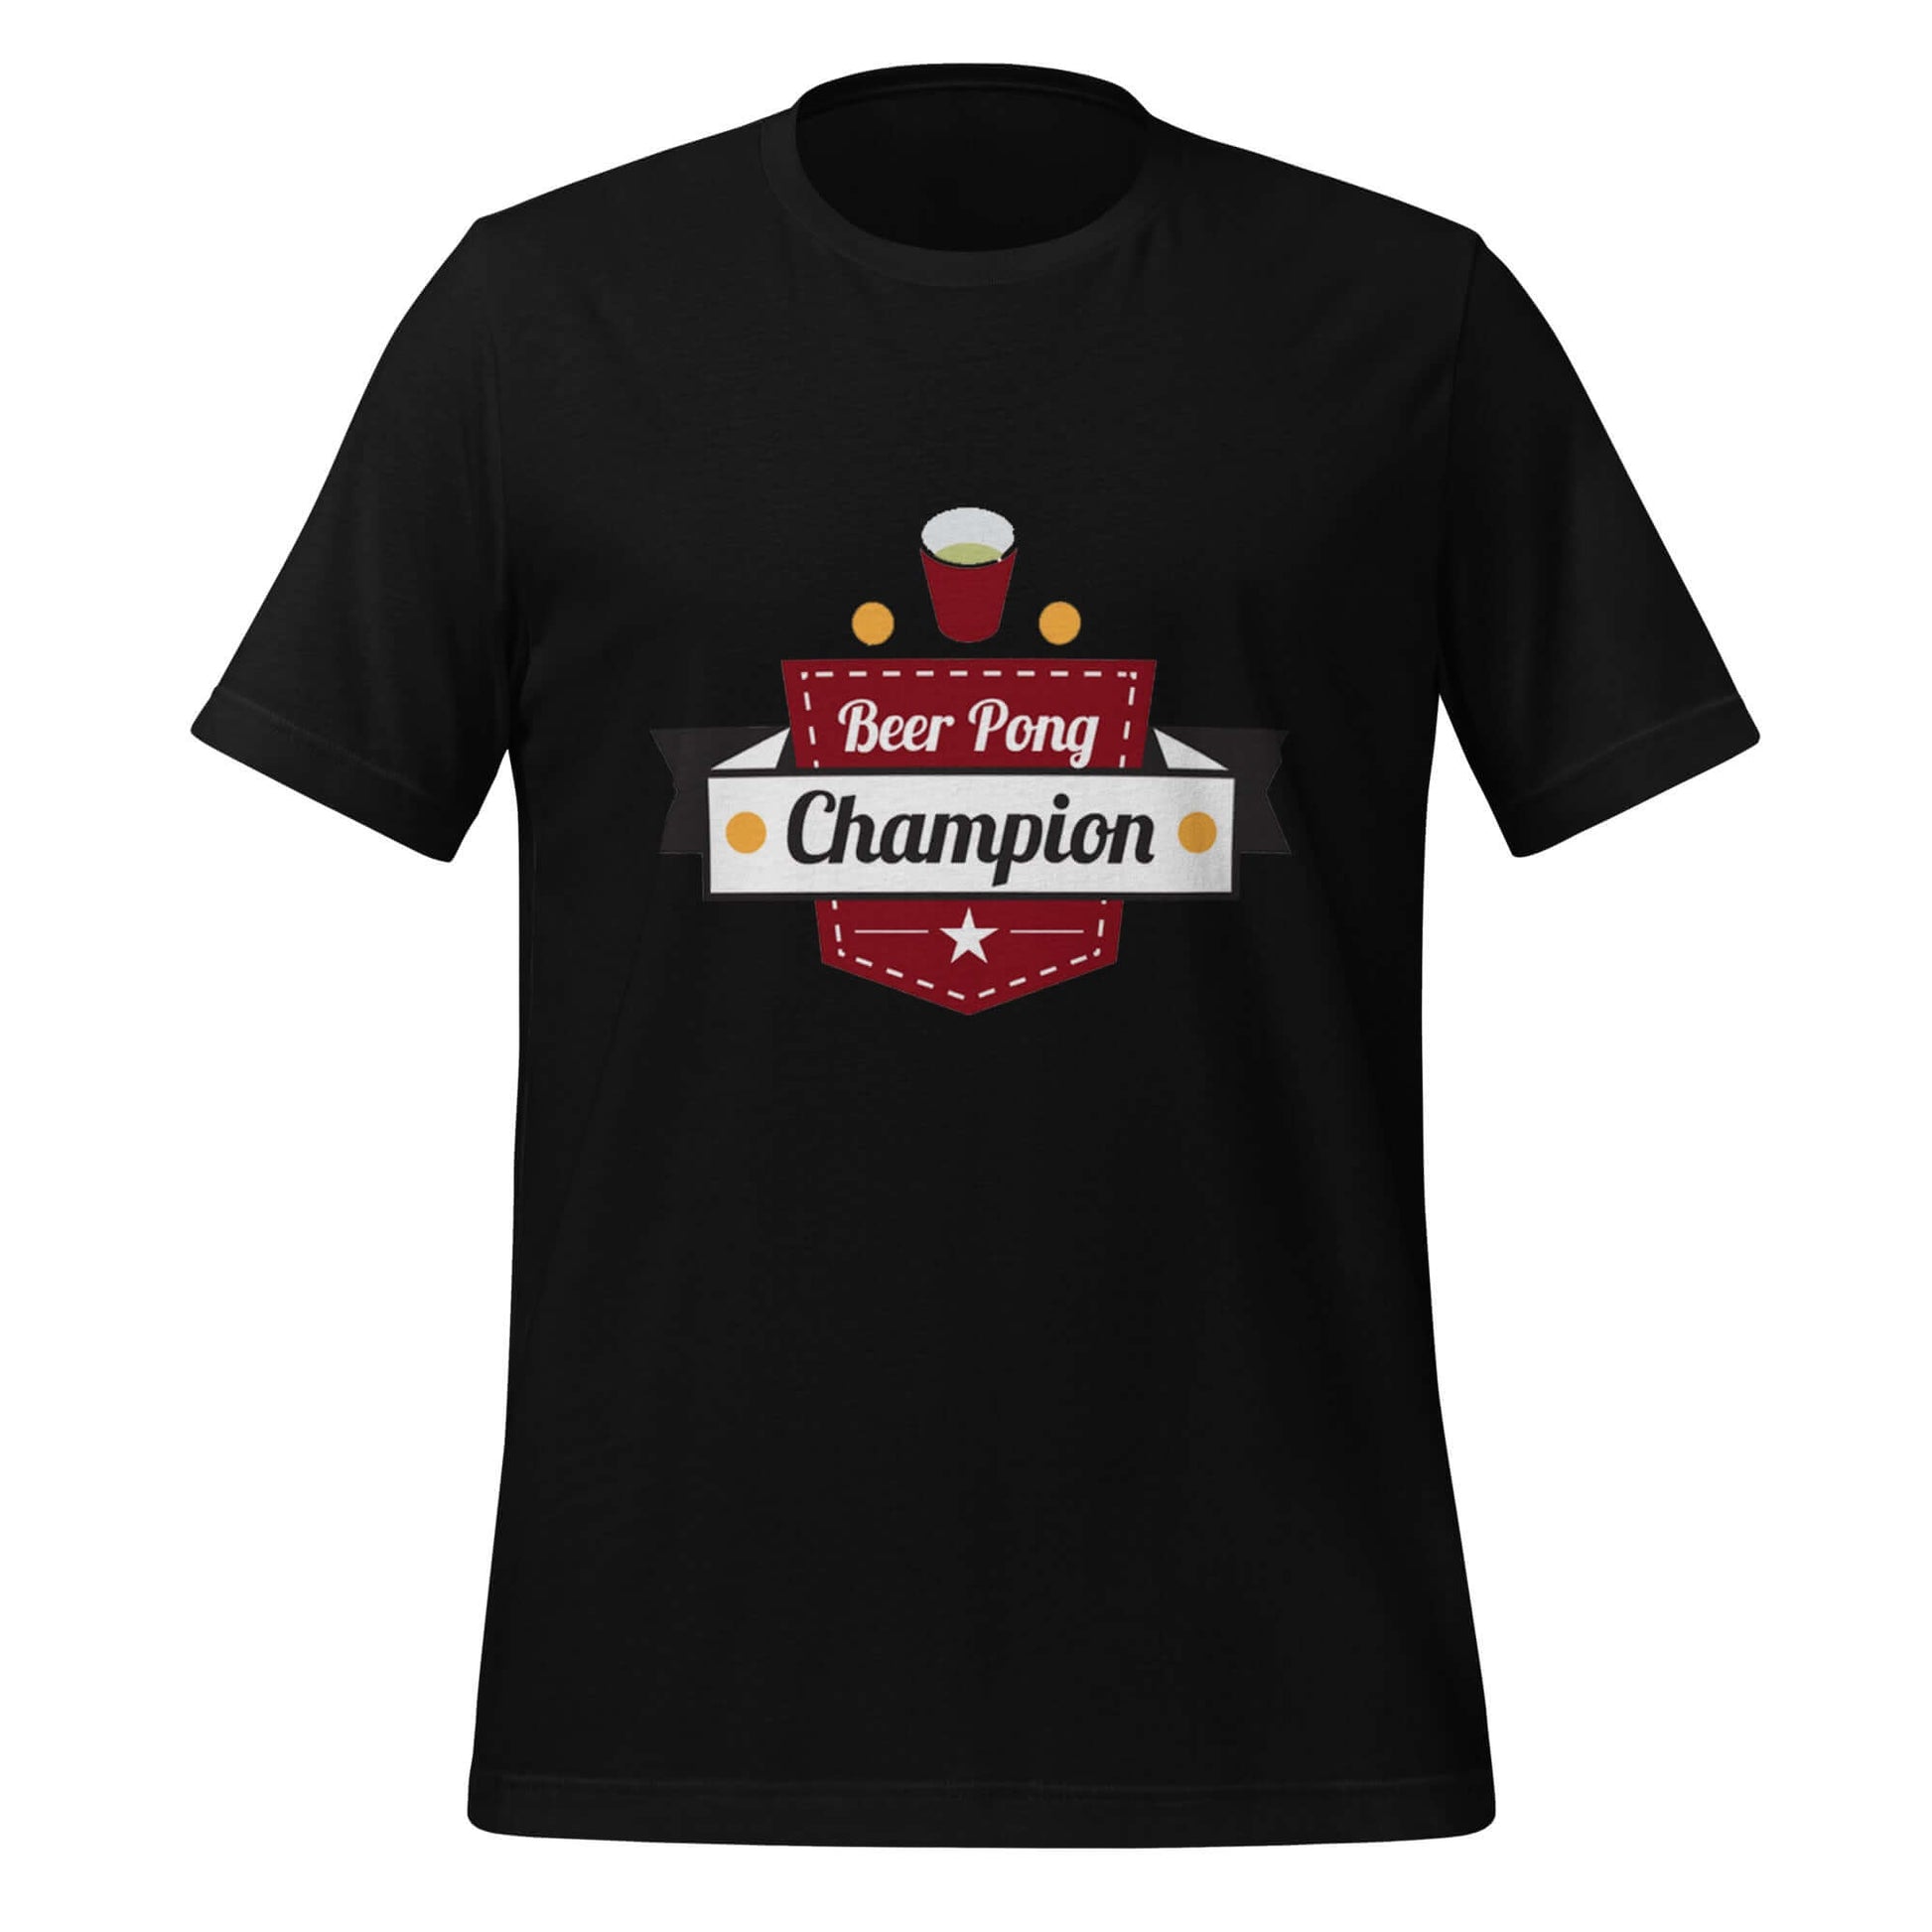 Beer Pong Champion - Unisex t-shirt - Black